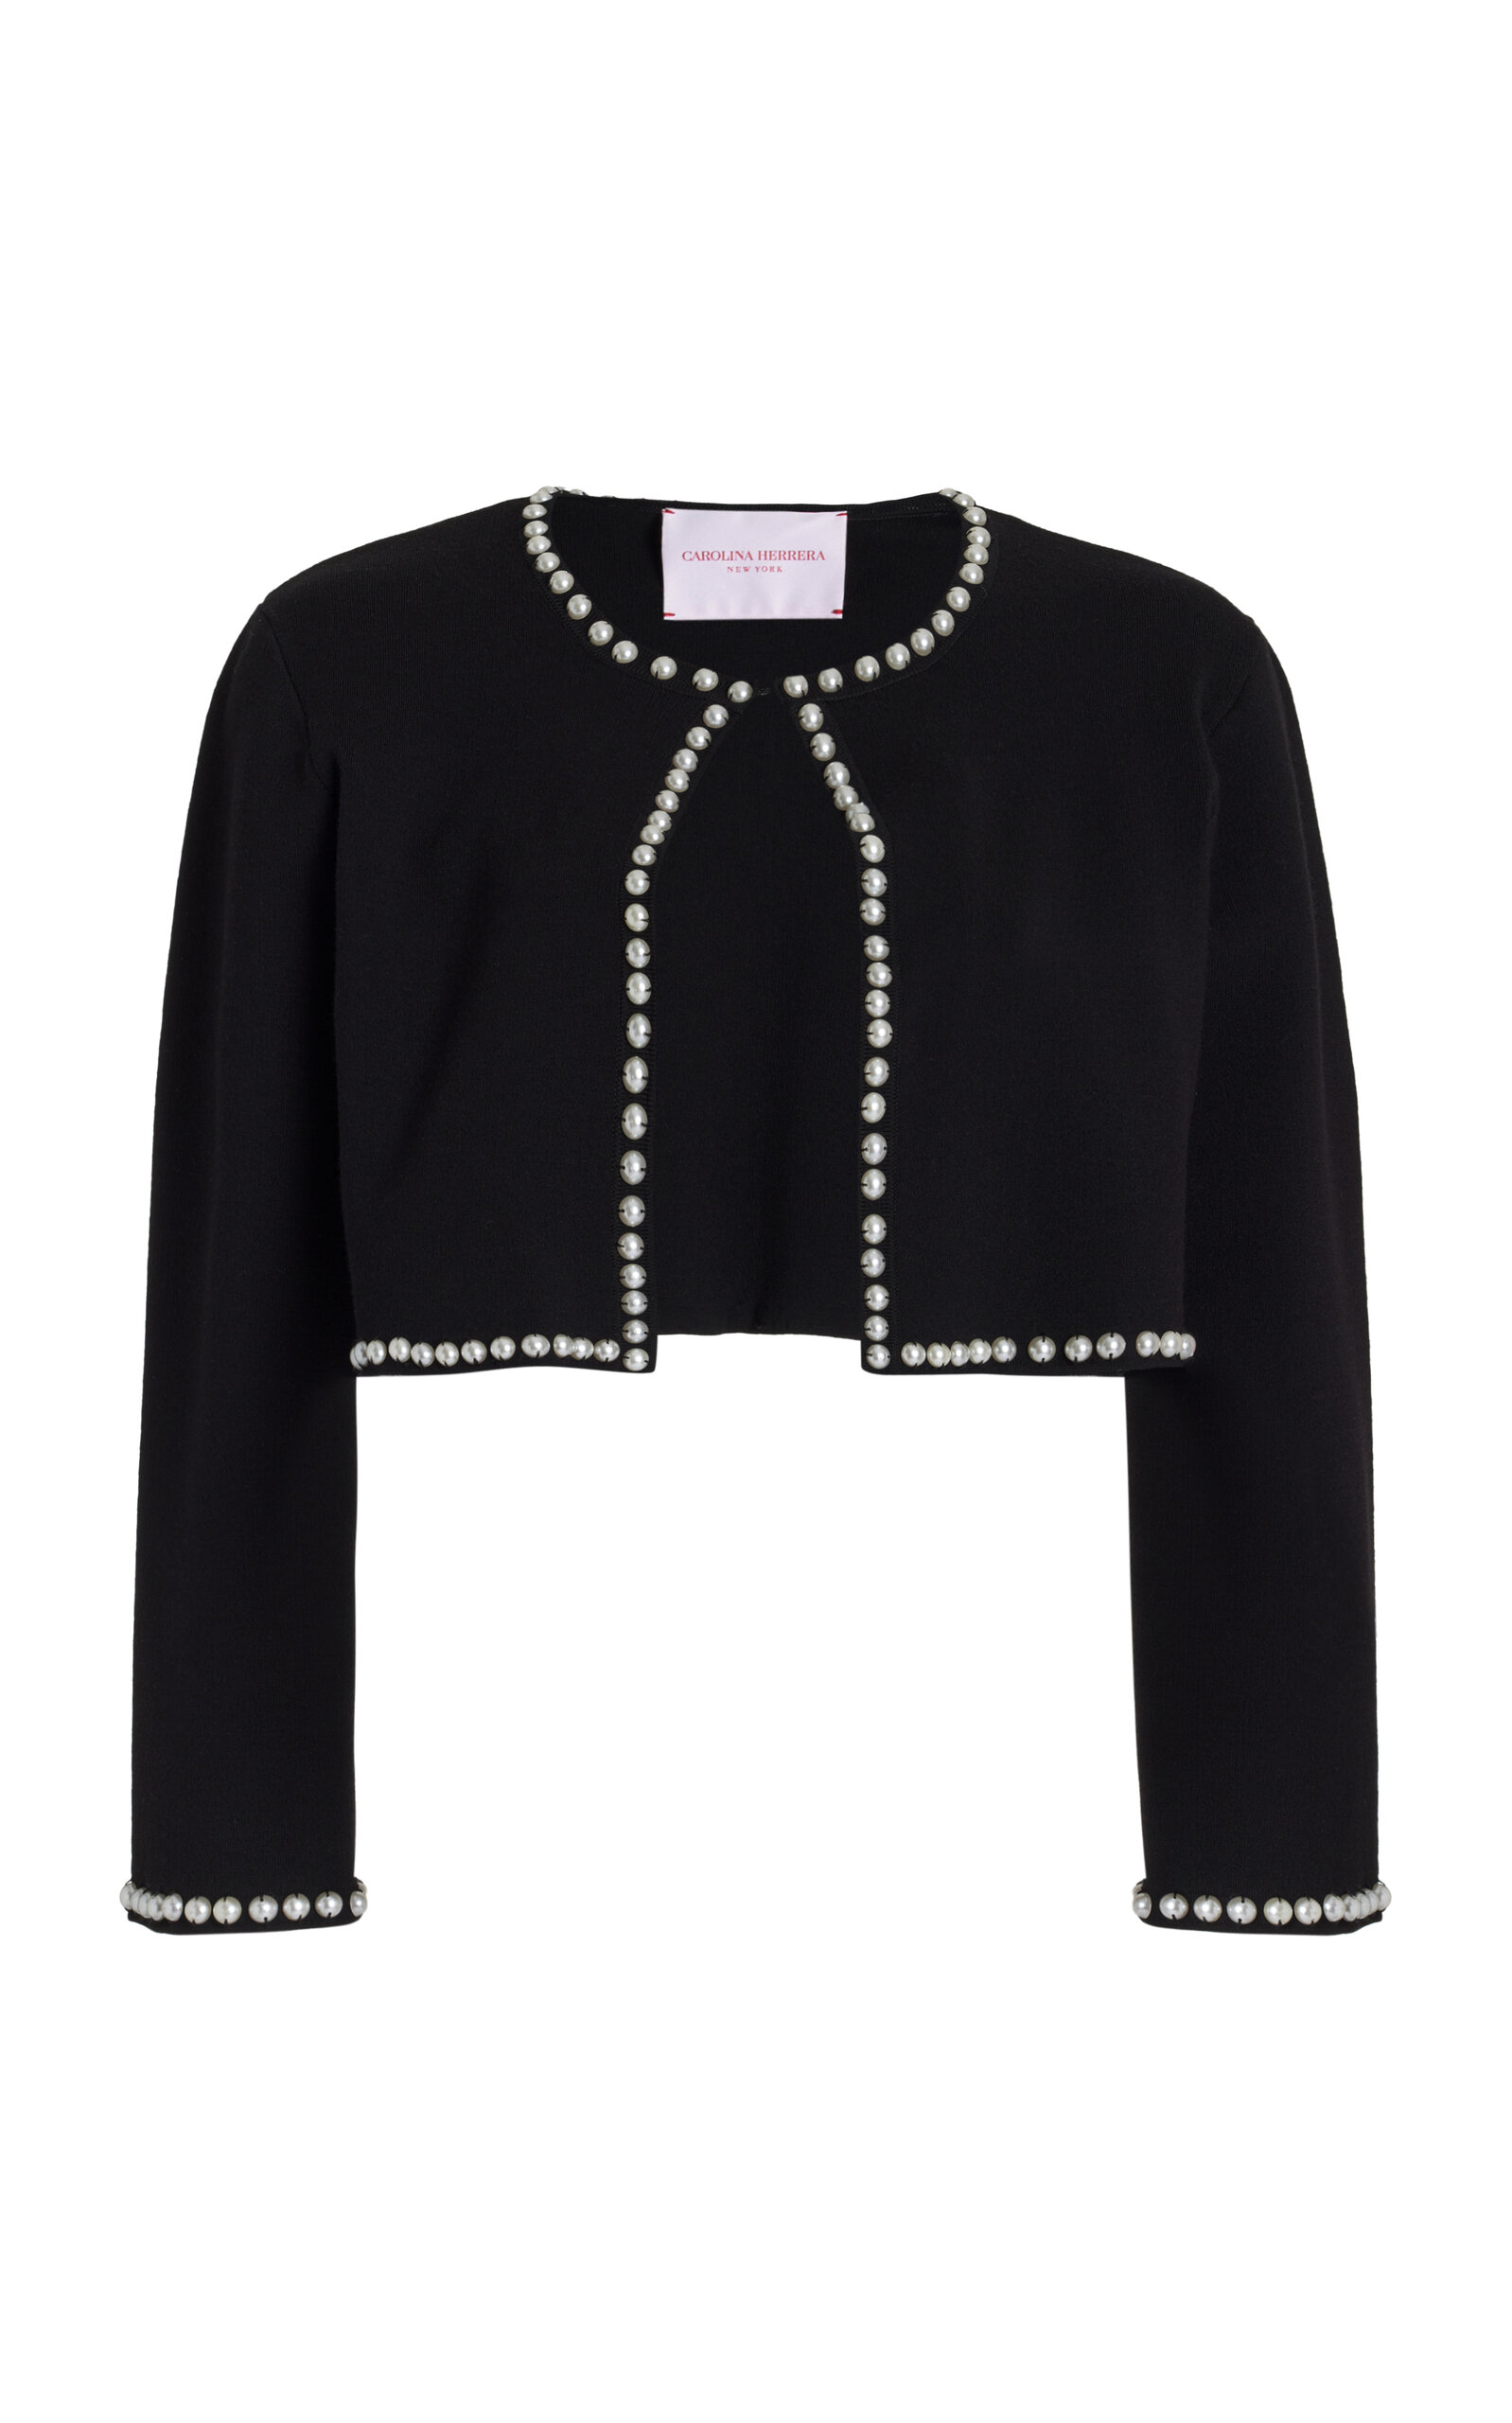 https://www.modaoperandi.com/assets/images/products/941041/578019/large_carolina-herrera-black-cropped-embellished-wool-bolero-sweater.jpg?_t=1671034184